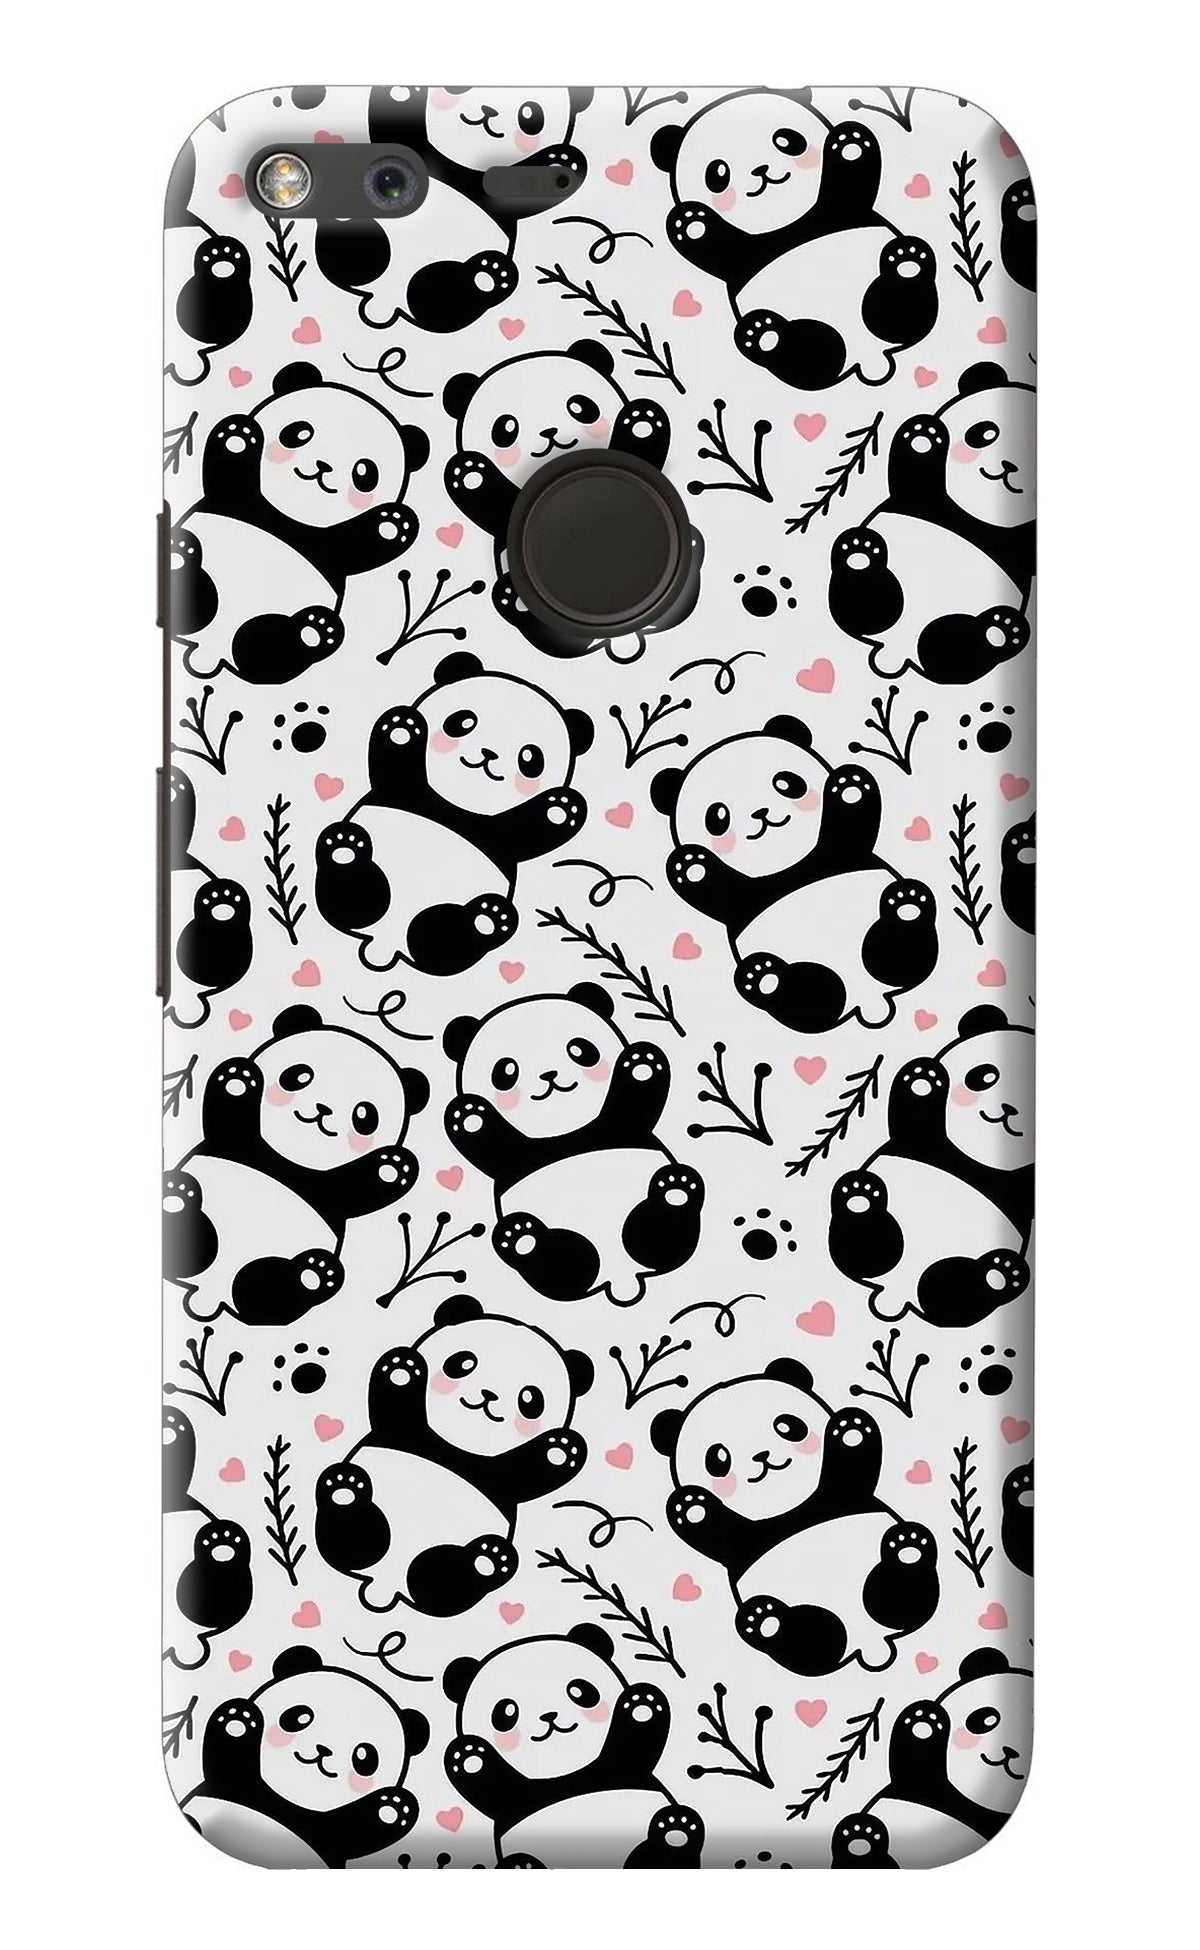 Cute Panda Google Pixel Back Cover